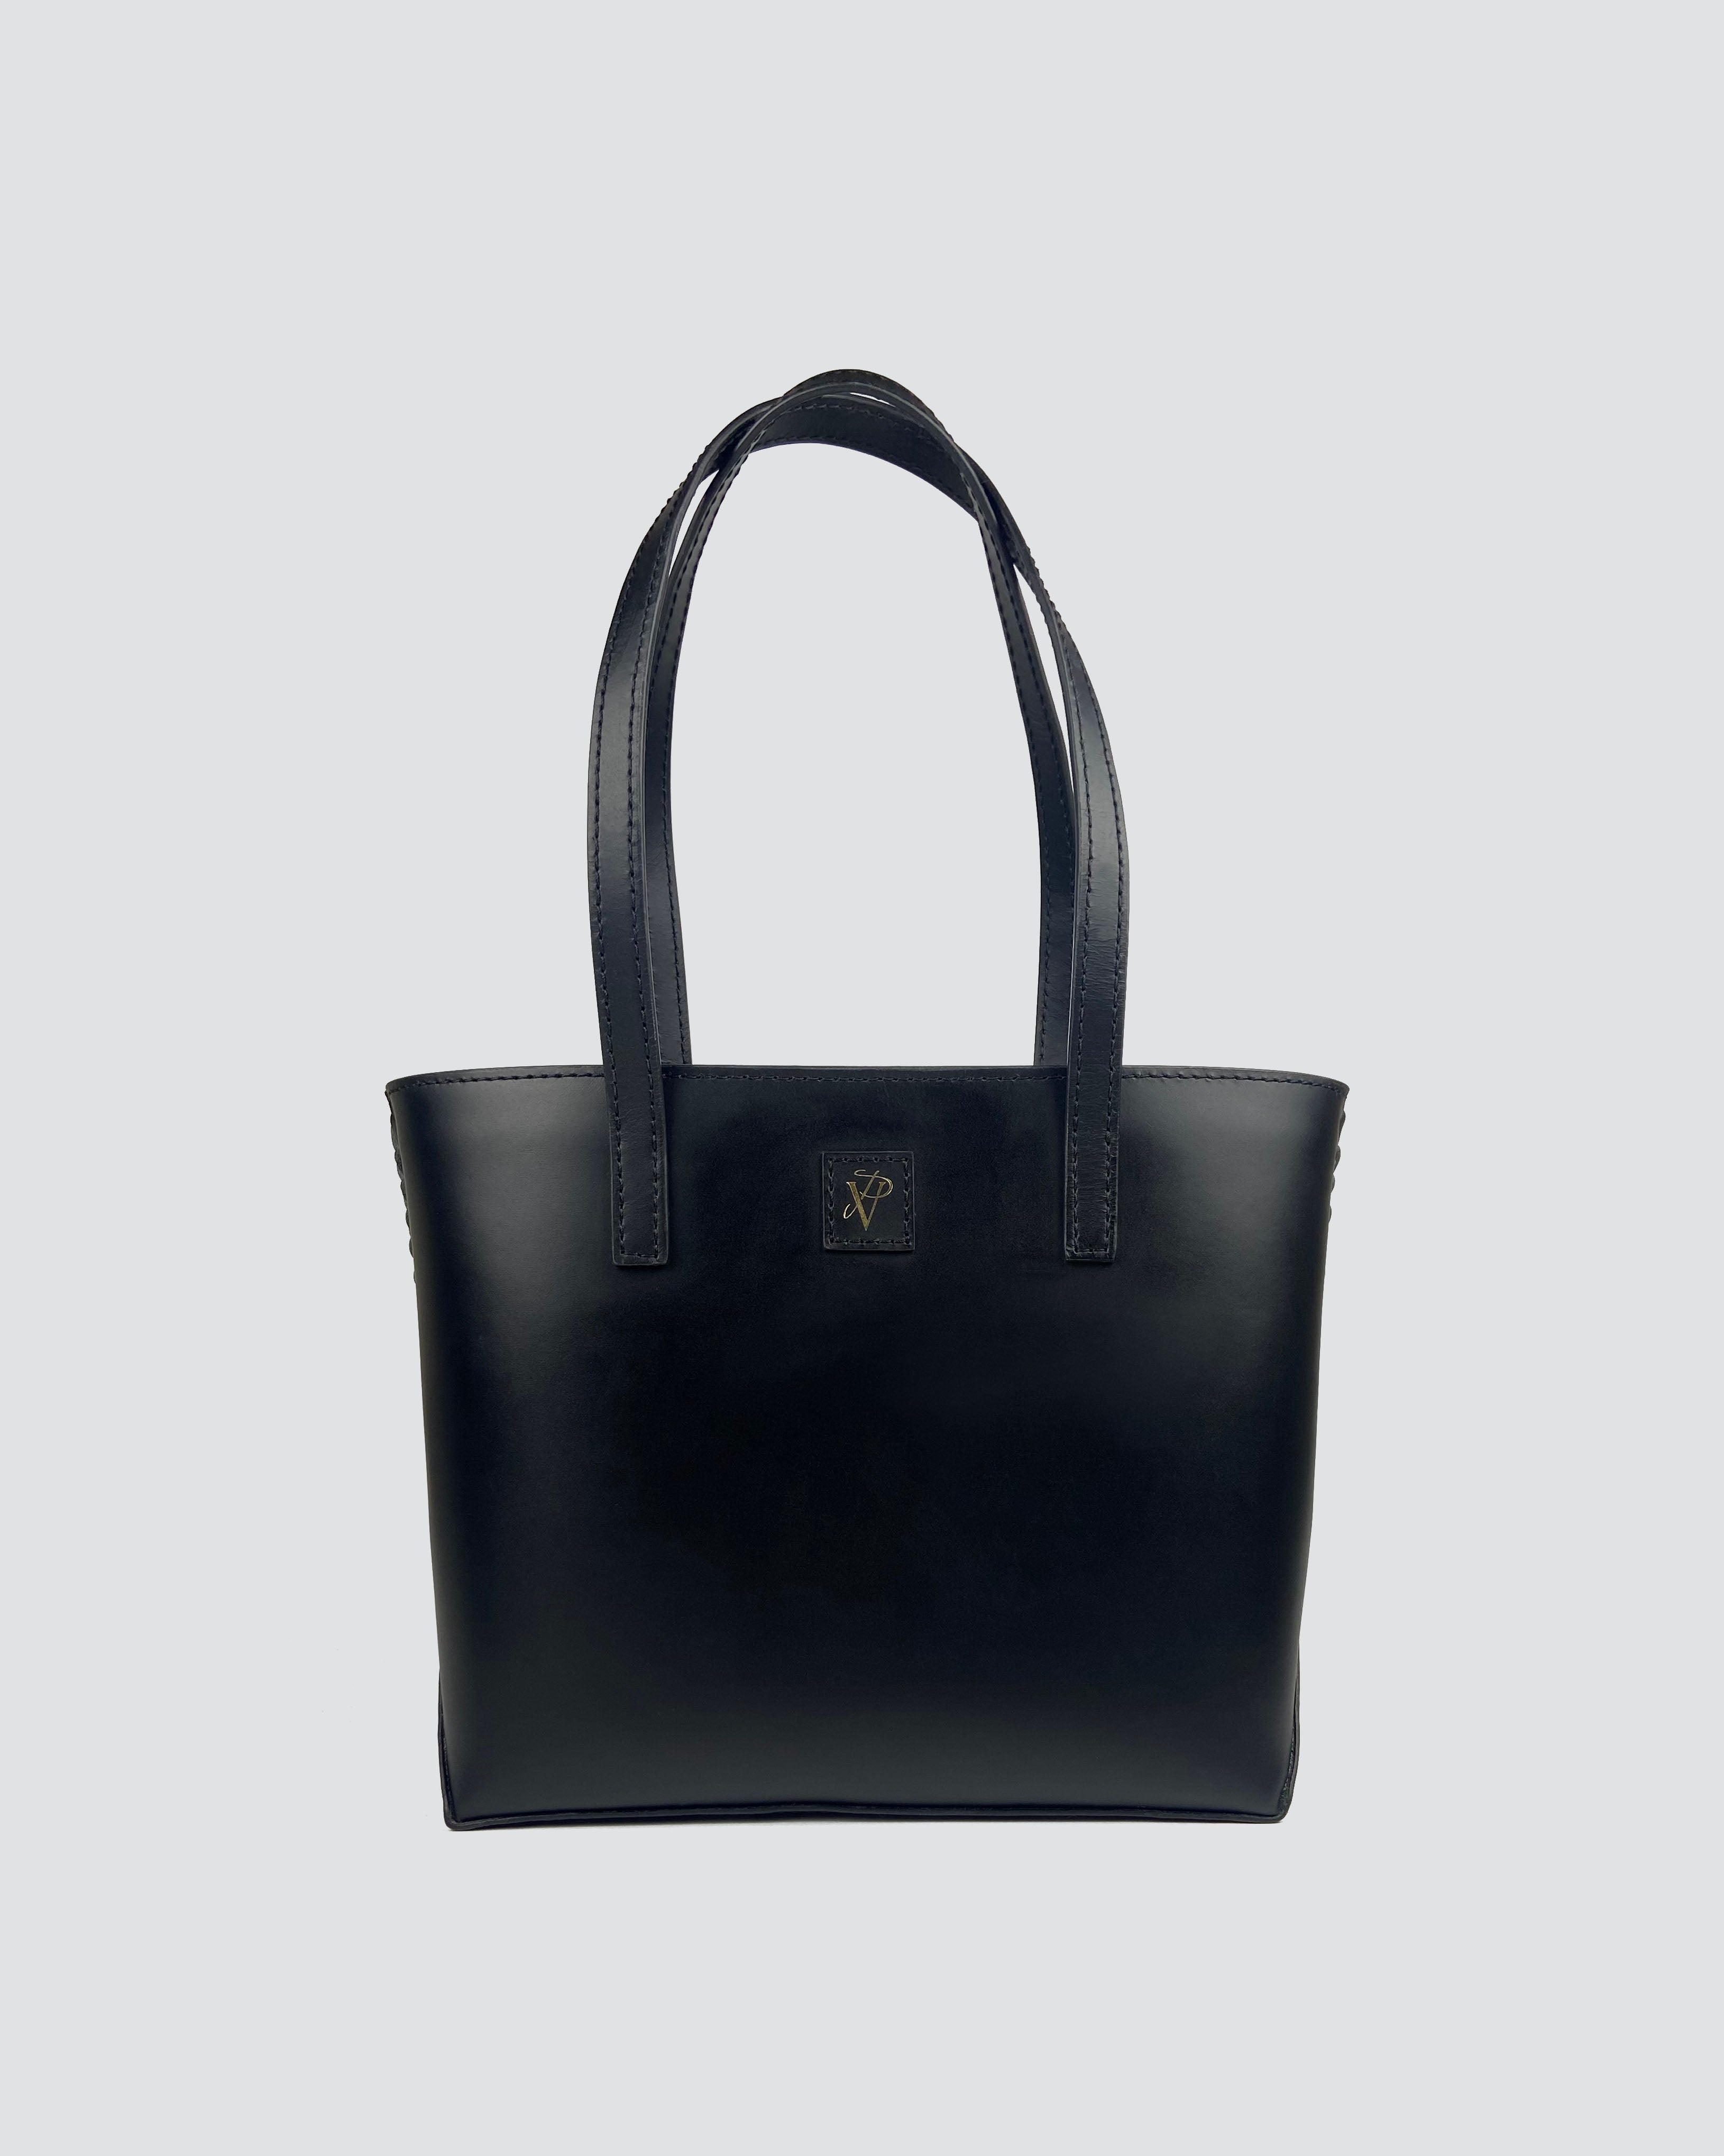 Tote Bag “Charlotte” - Black